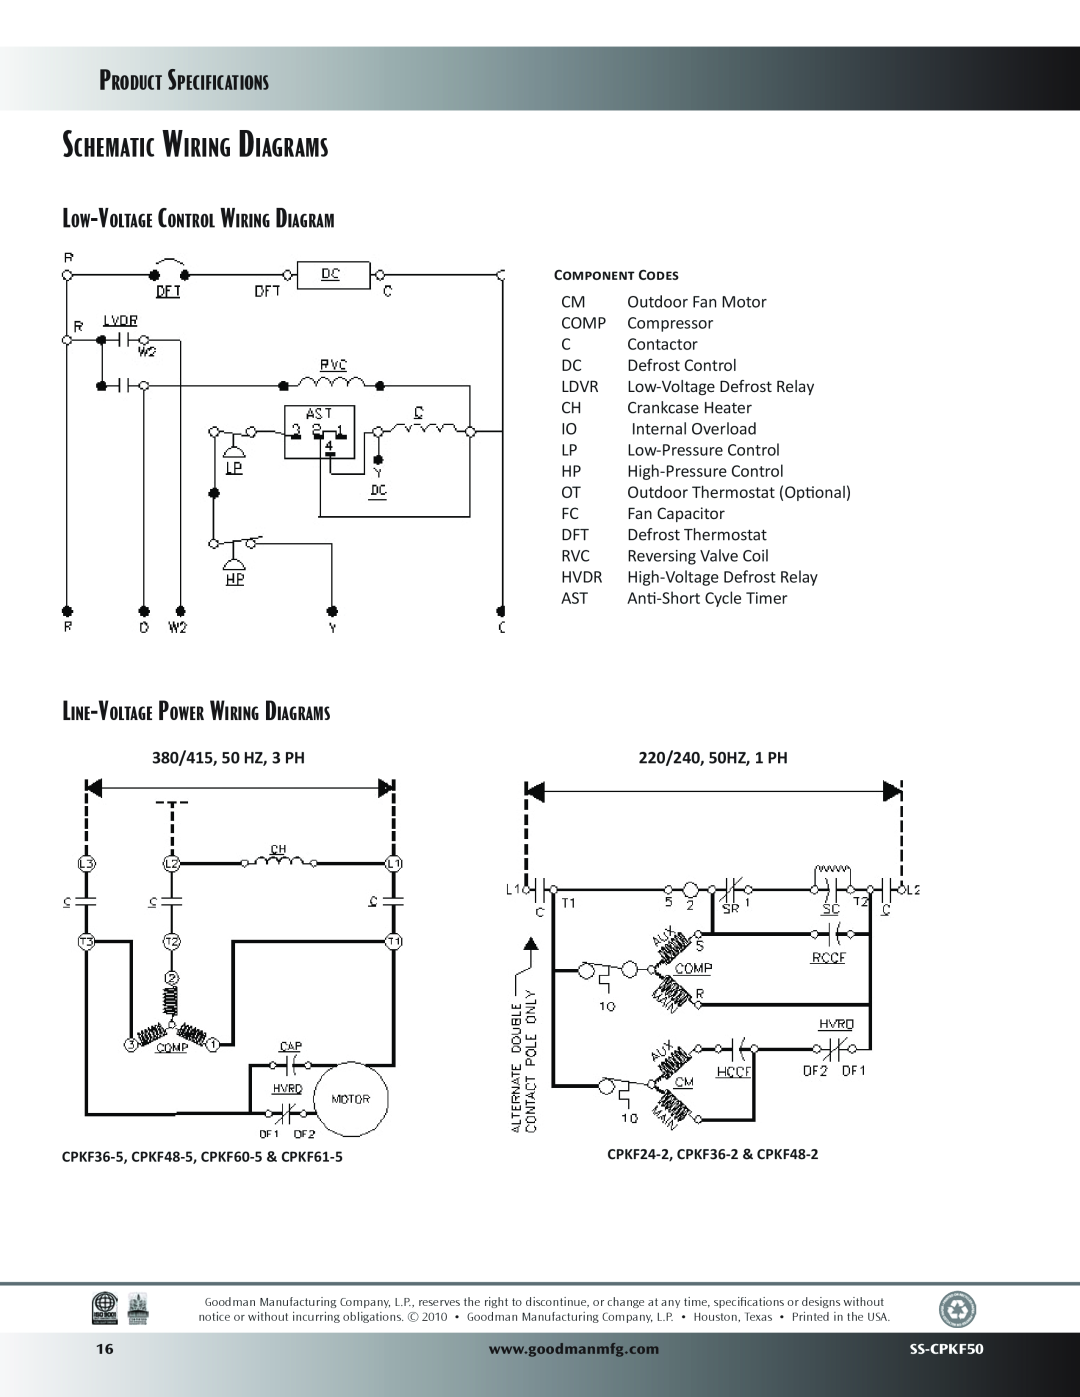 Goodman Mfg SS-CPKF50 Schematic Wiring Diagrams, Low-Voltage Control Wiring Diagram, Line-Voltage Power Wiring Diagrams 